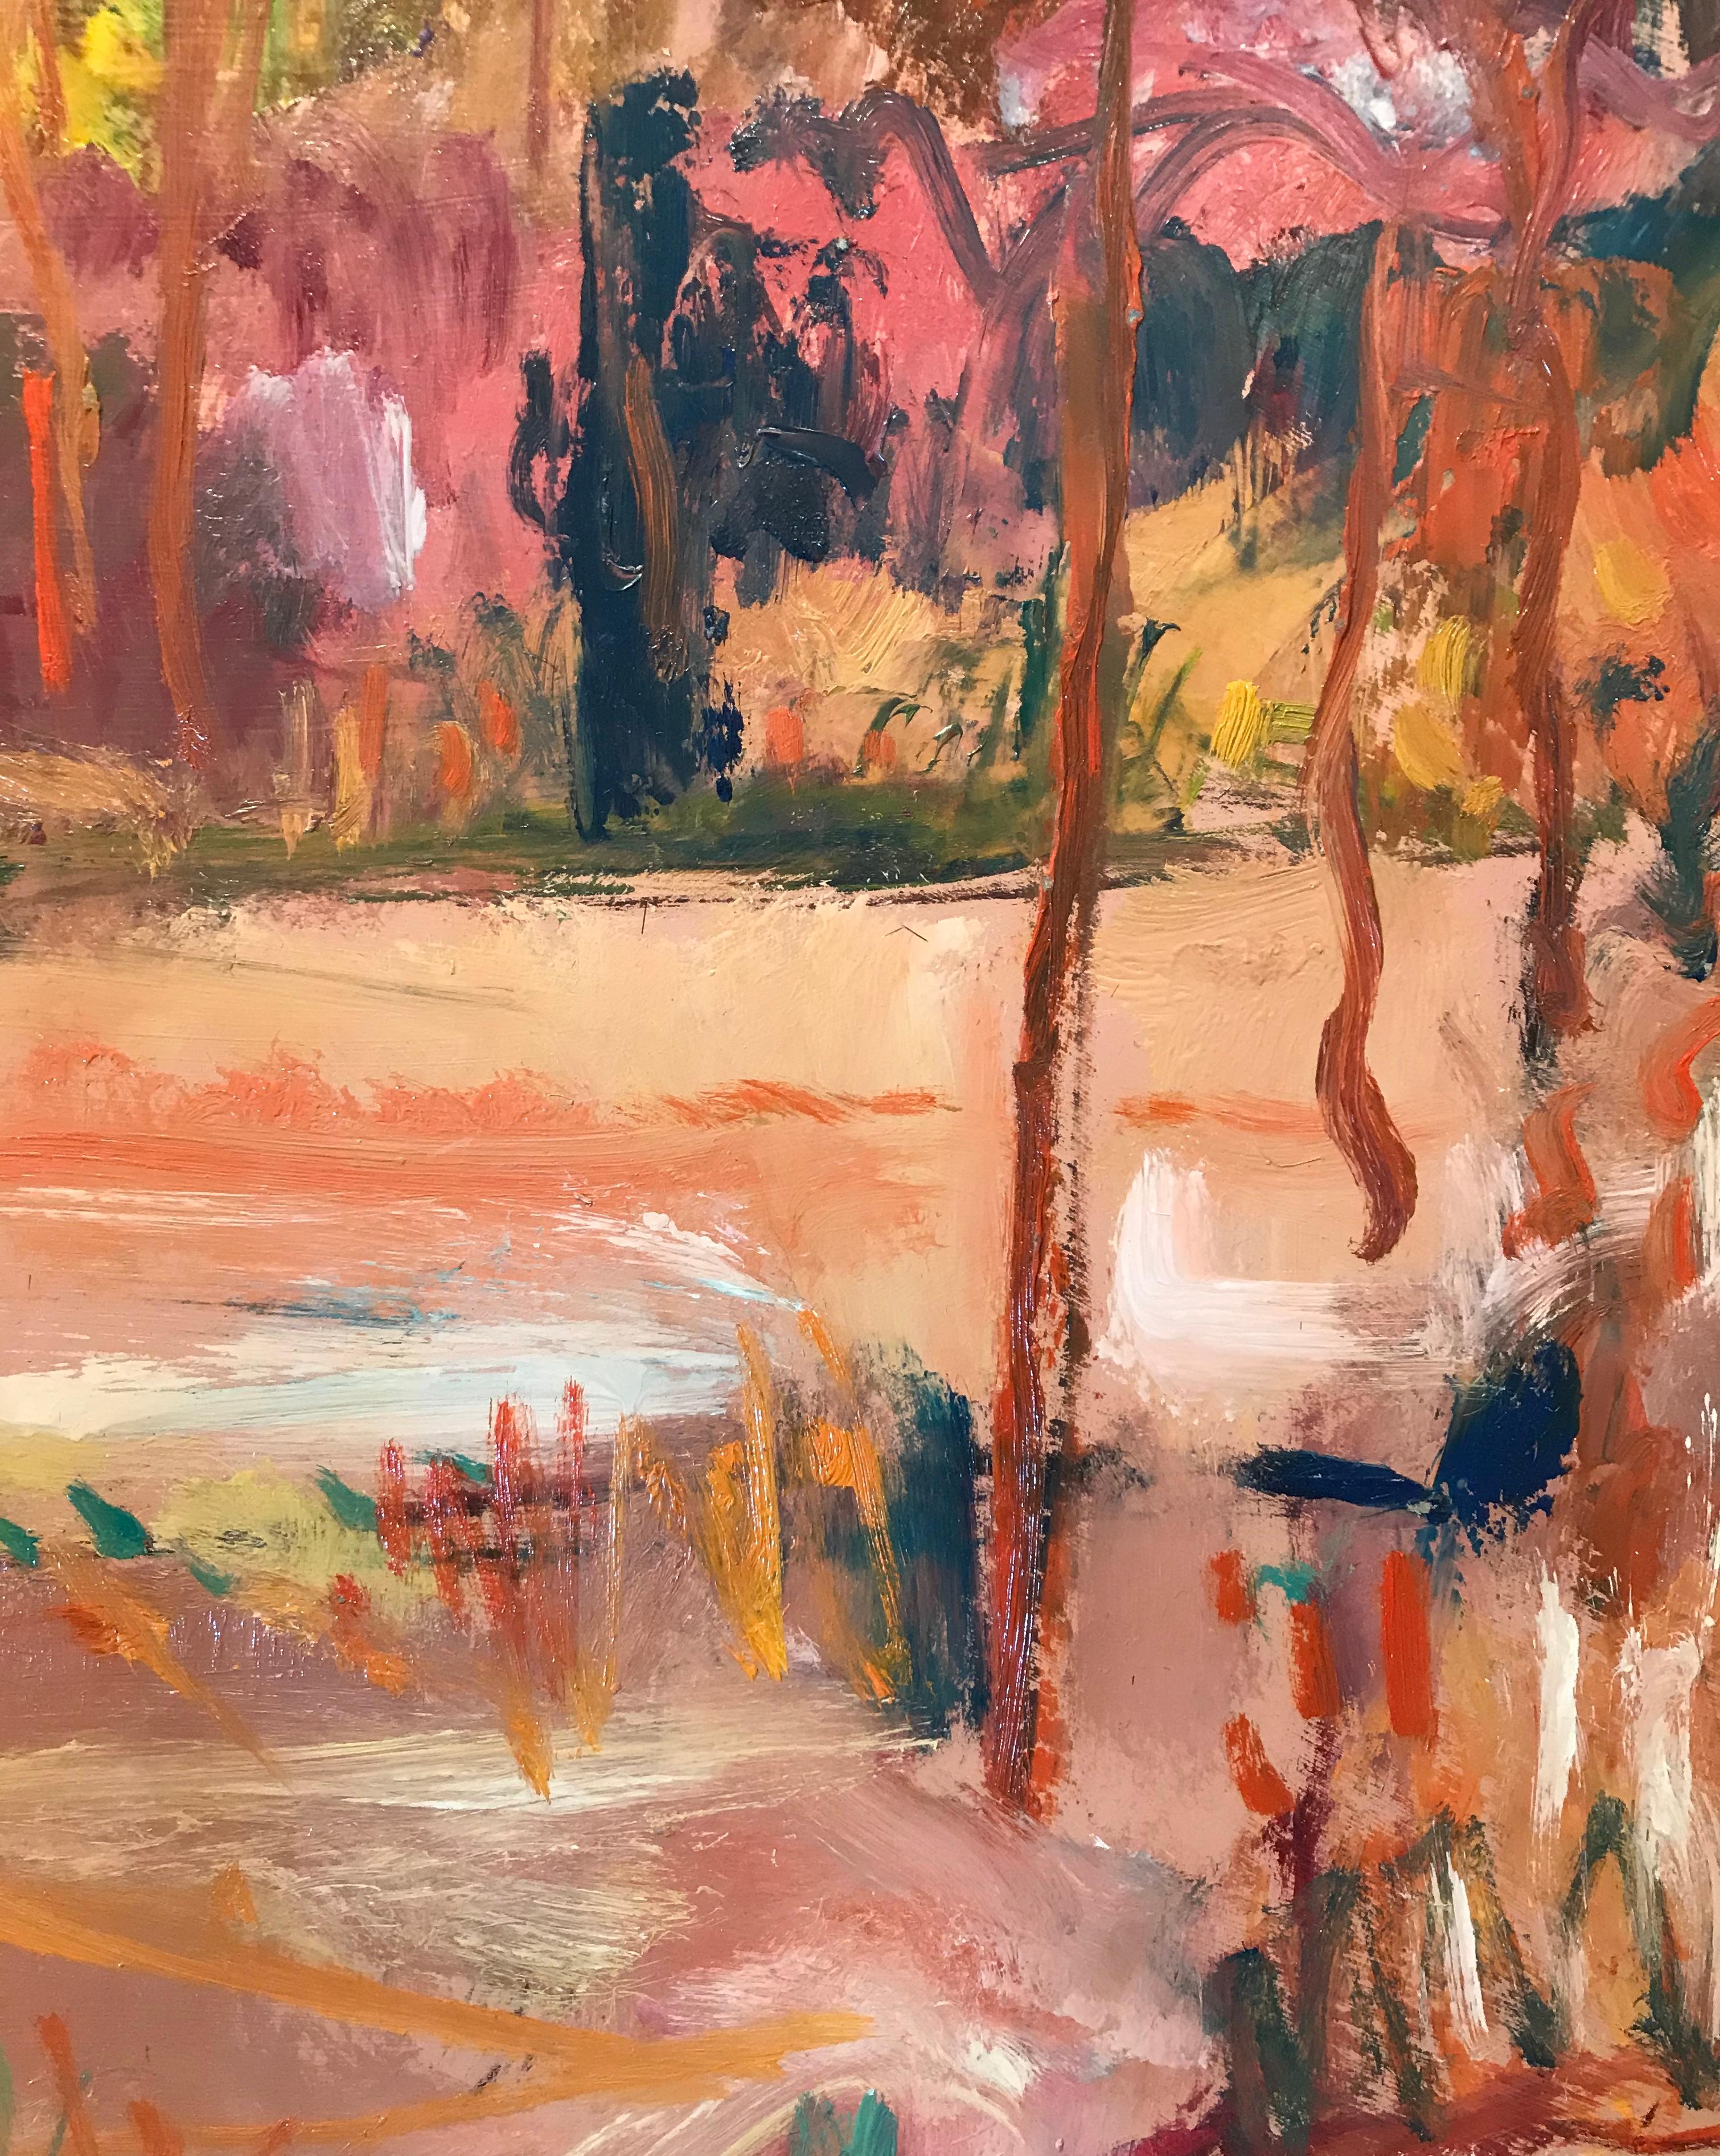 Tableau n°75 by Jean Krillé - Oil on wood 80x100 cm - Orange Landscape Painting by Jean Krille